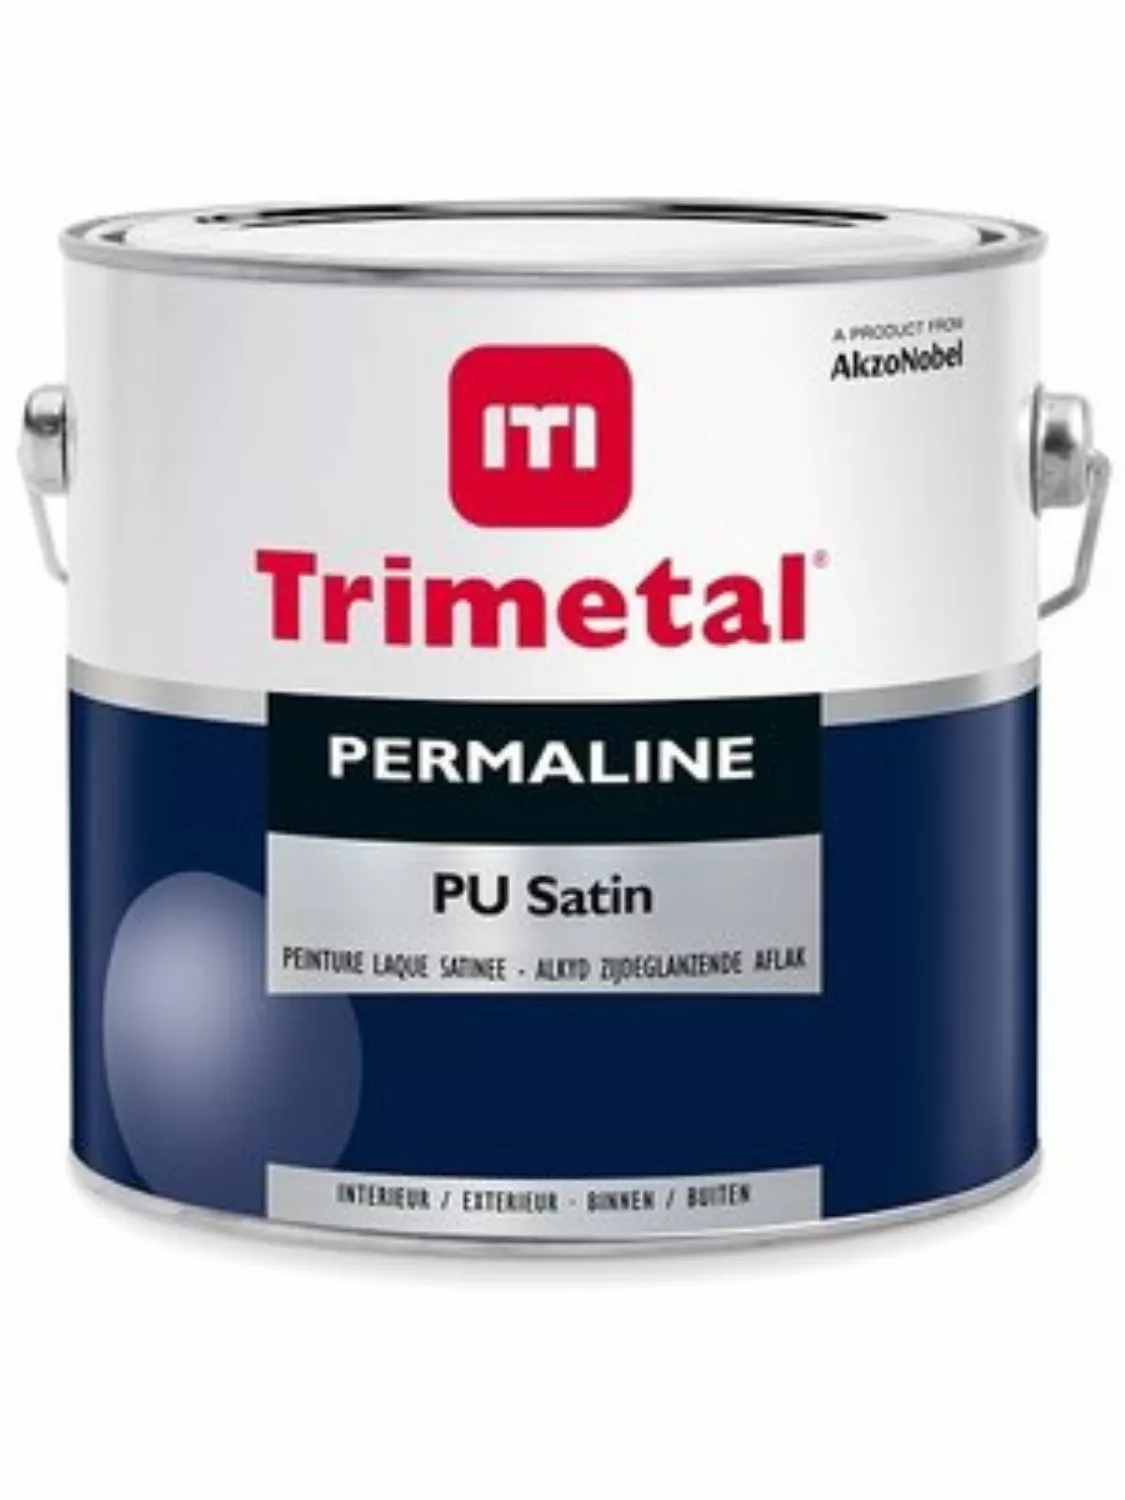 Trimetal permaline pu Satin - op kleur gemengd - 2,5L-image